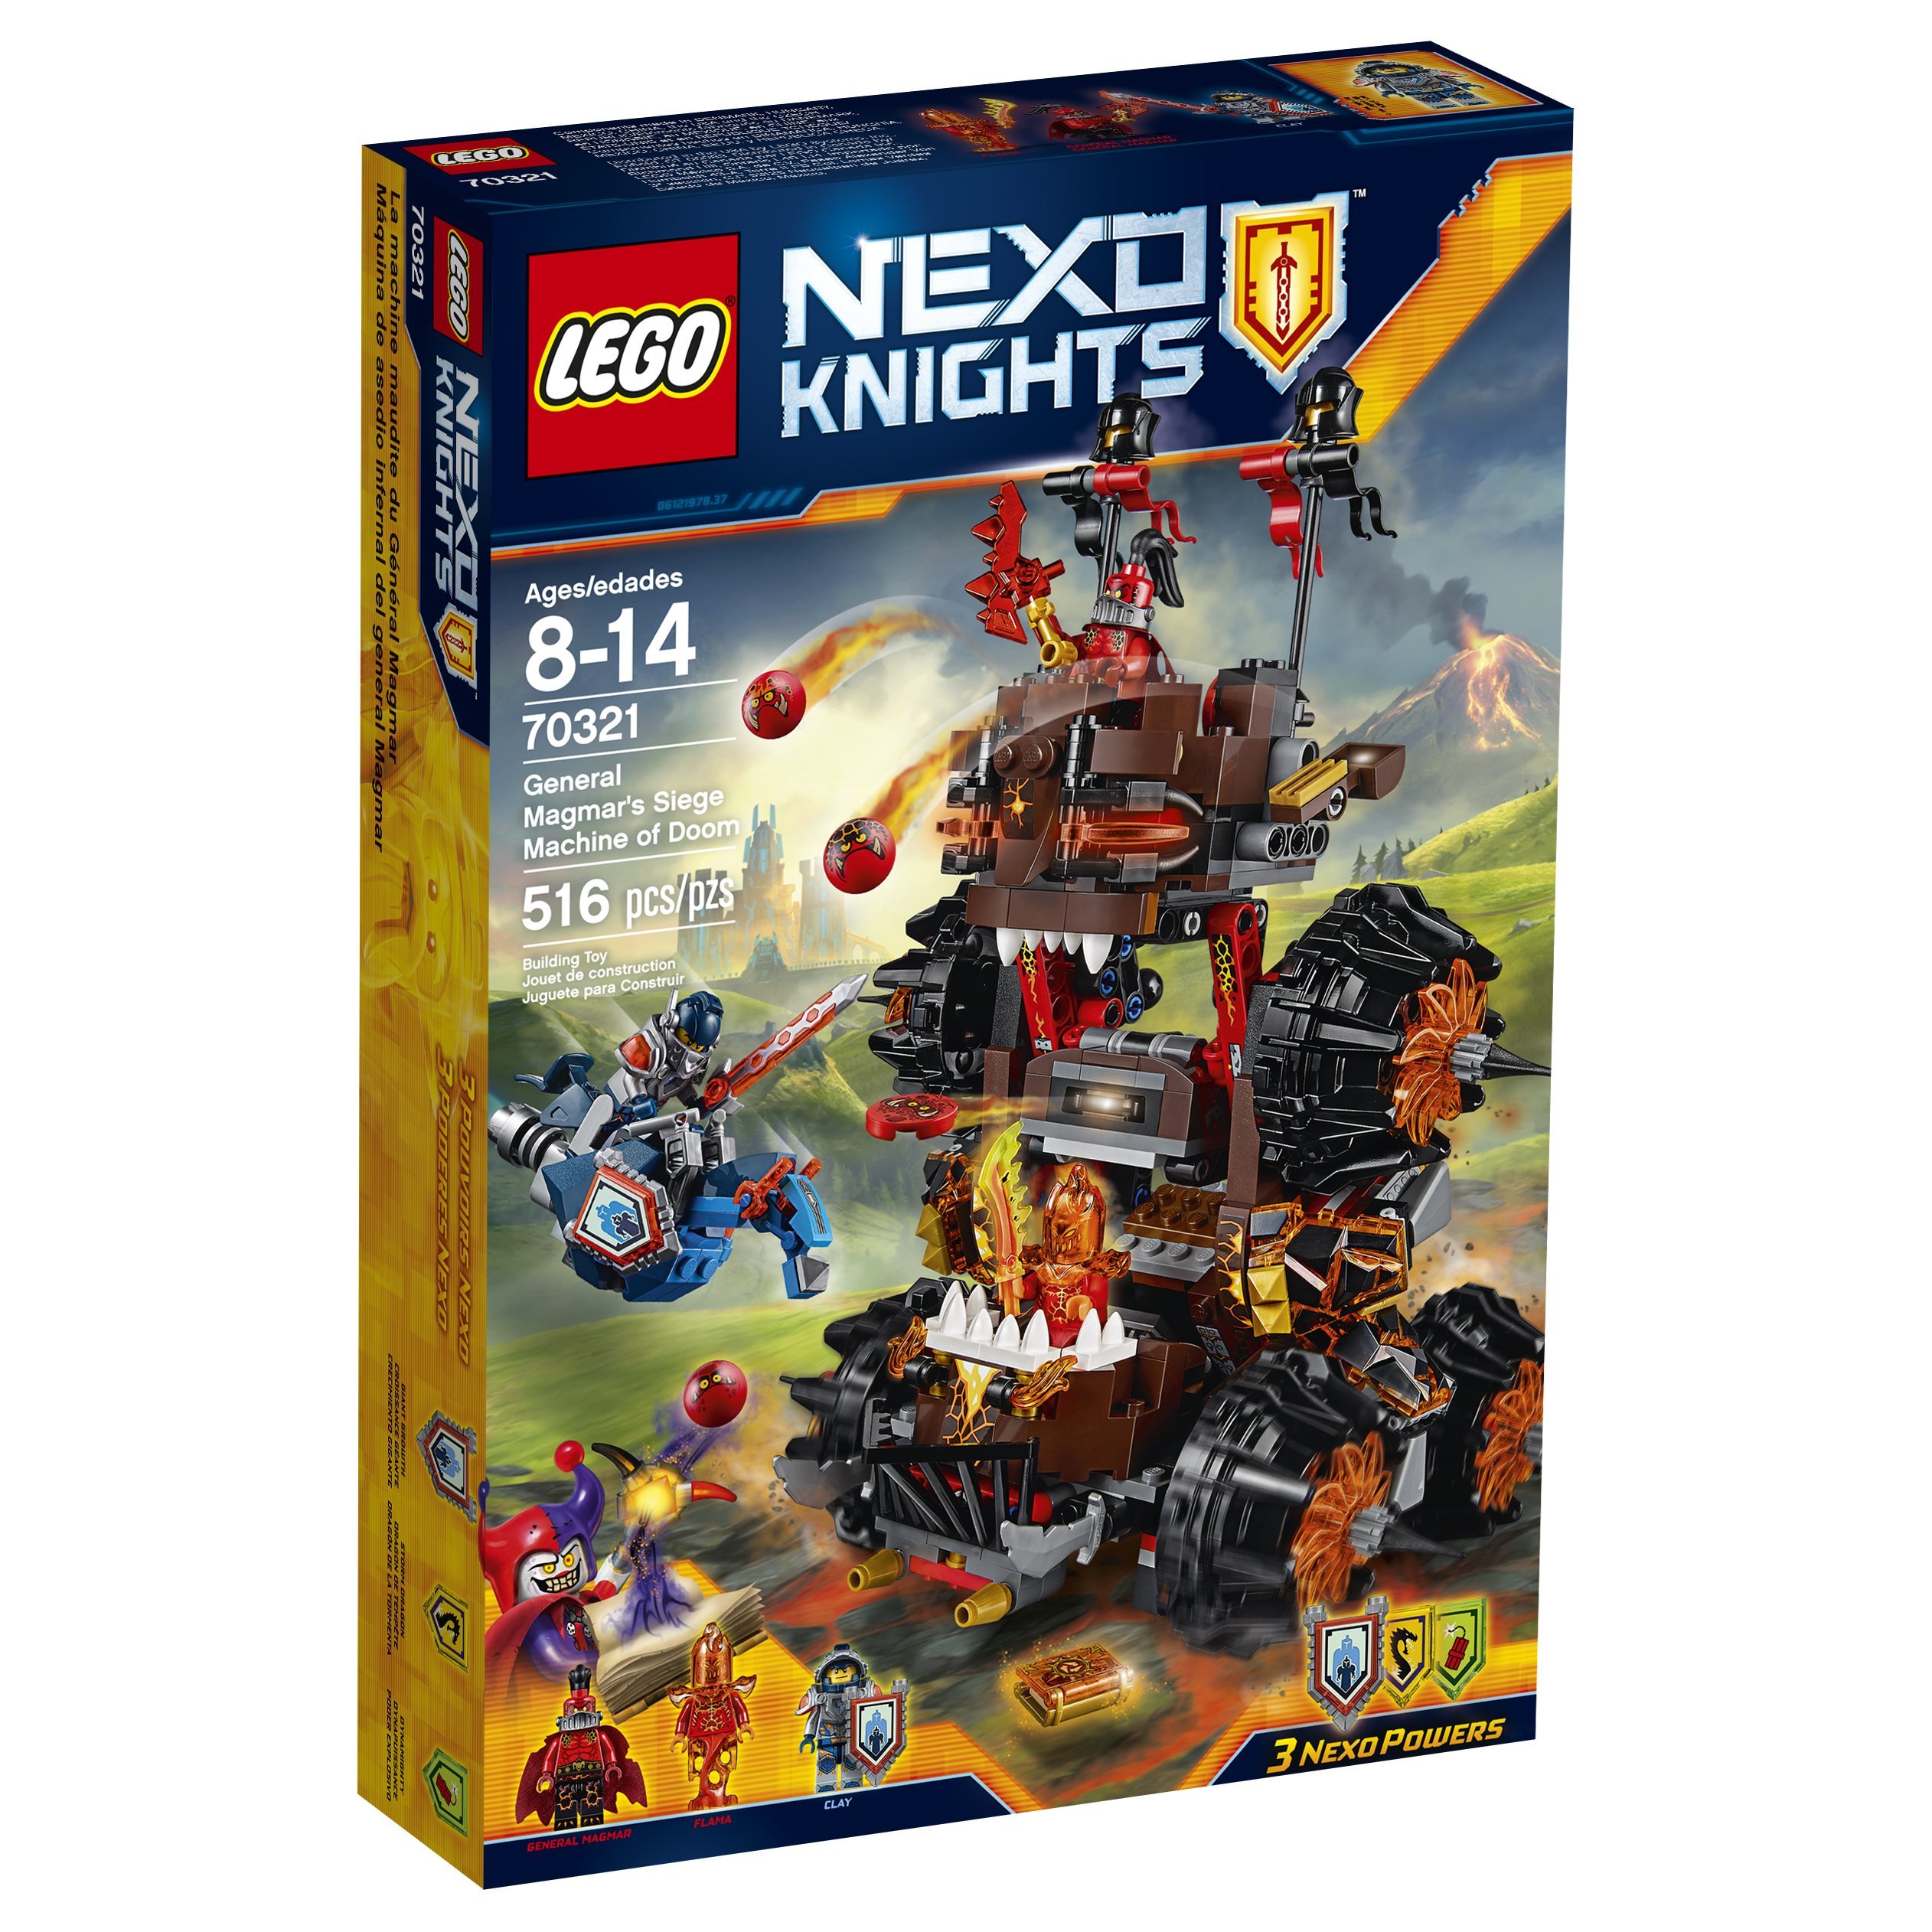 Nexo Knights 70321 General Magmar's Siege Machine of Doom Building Block Flama 